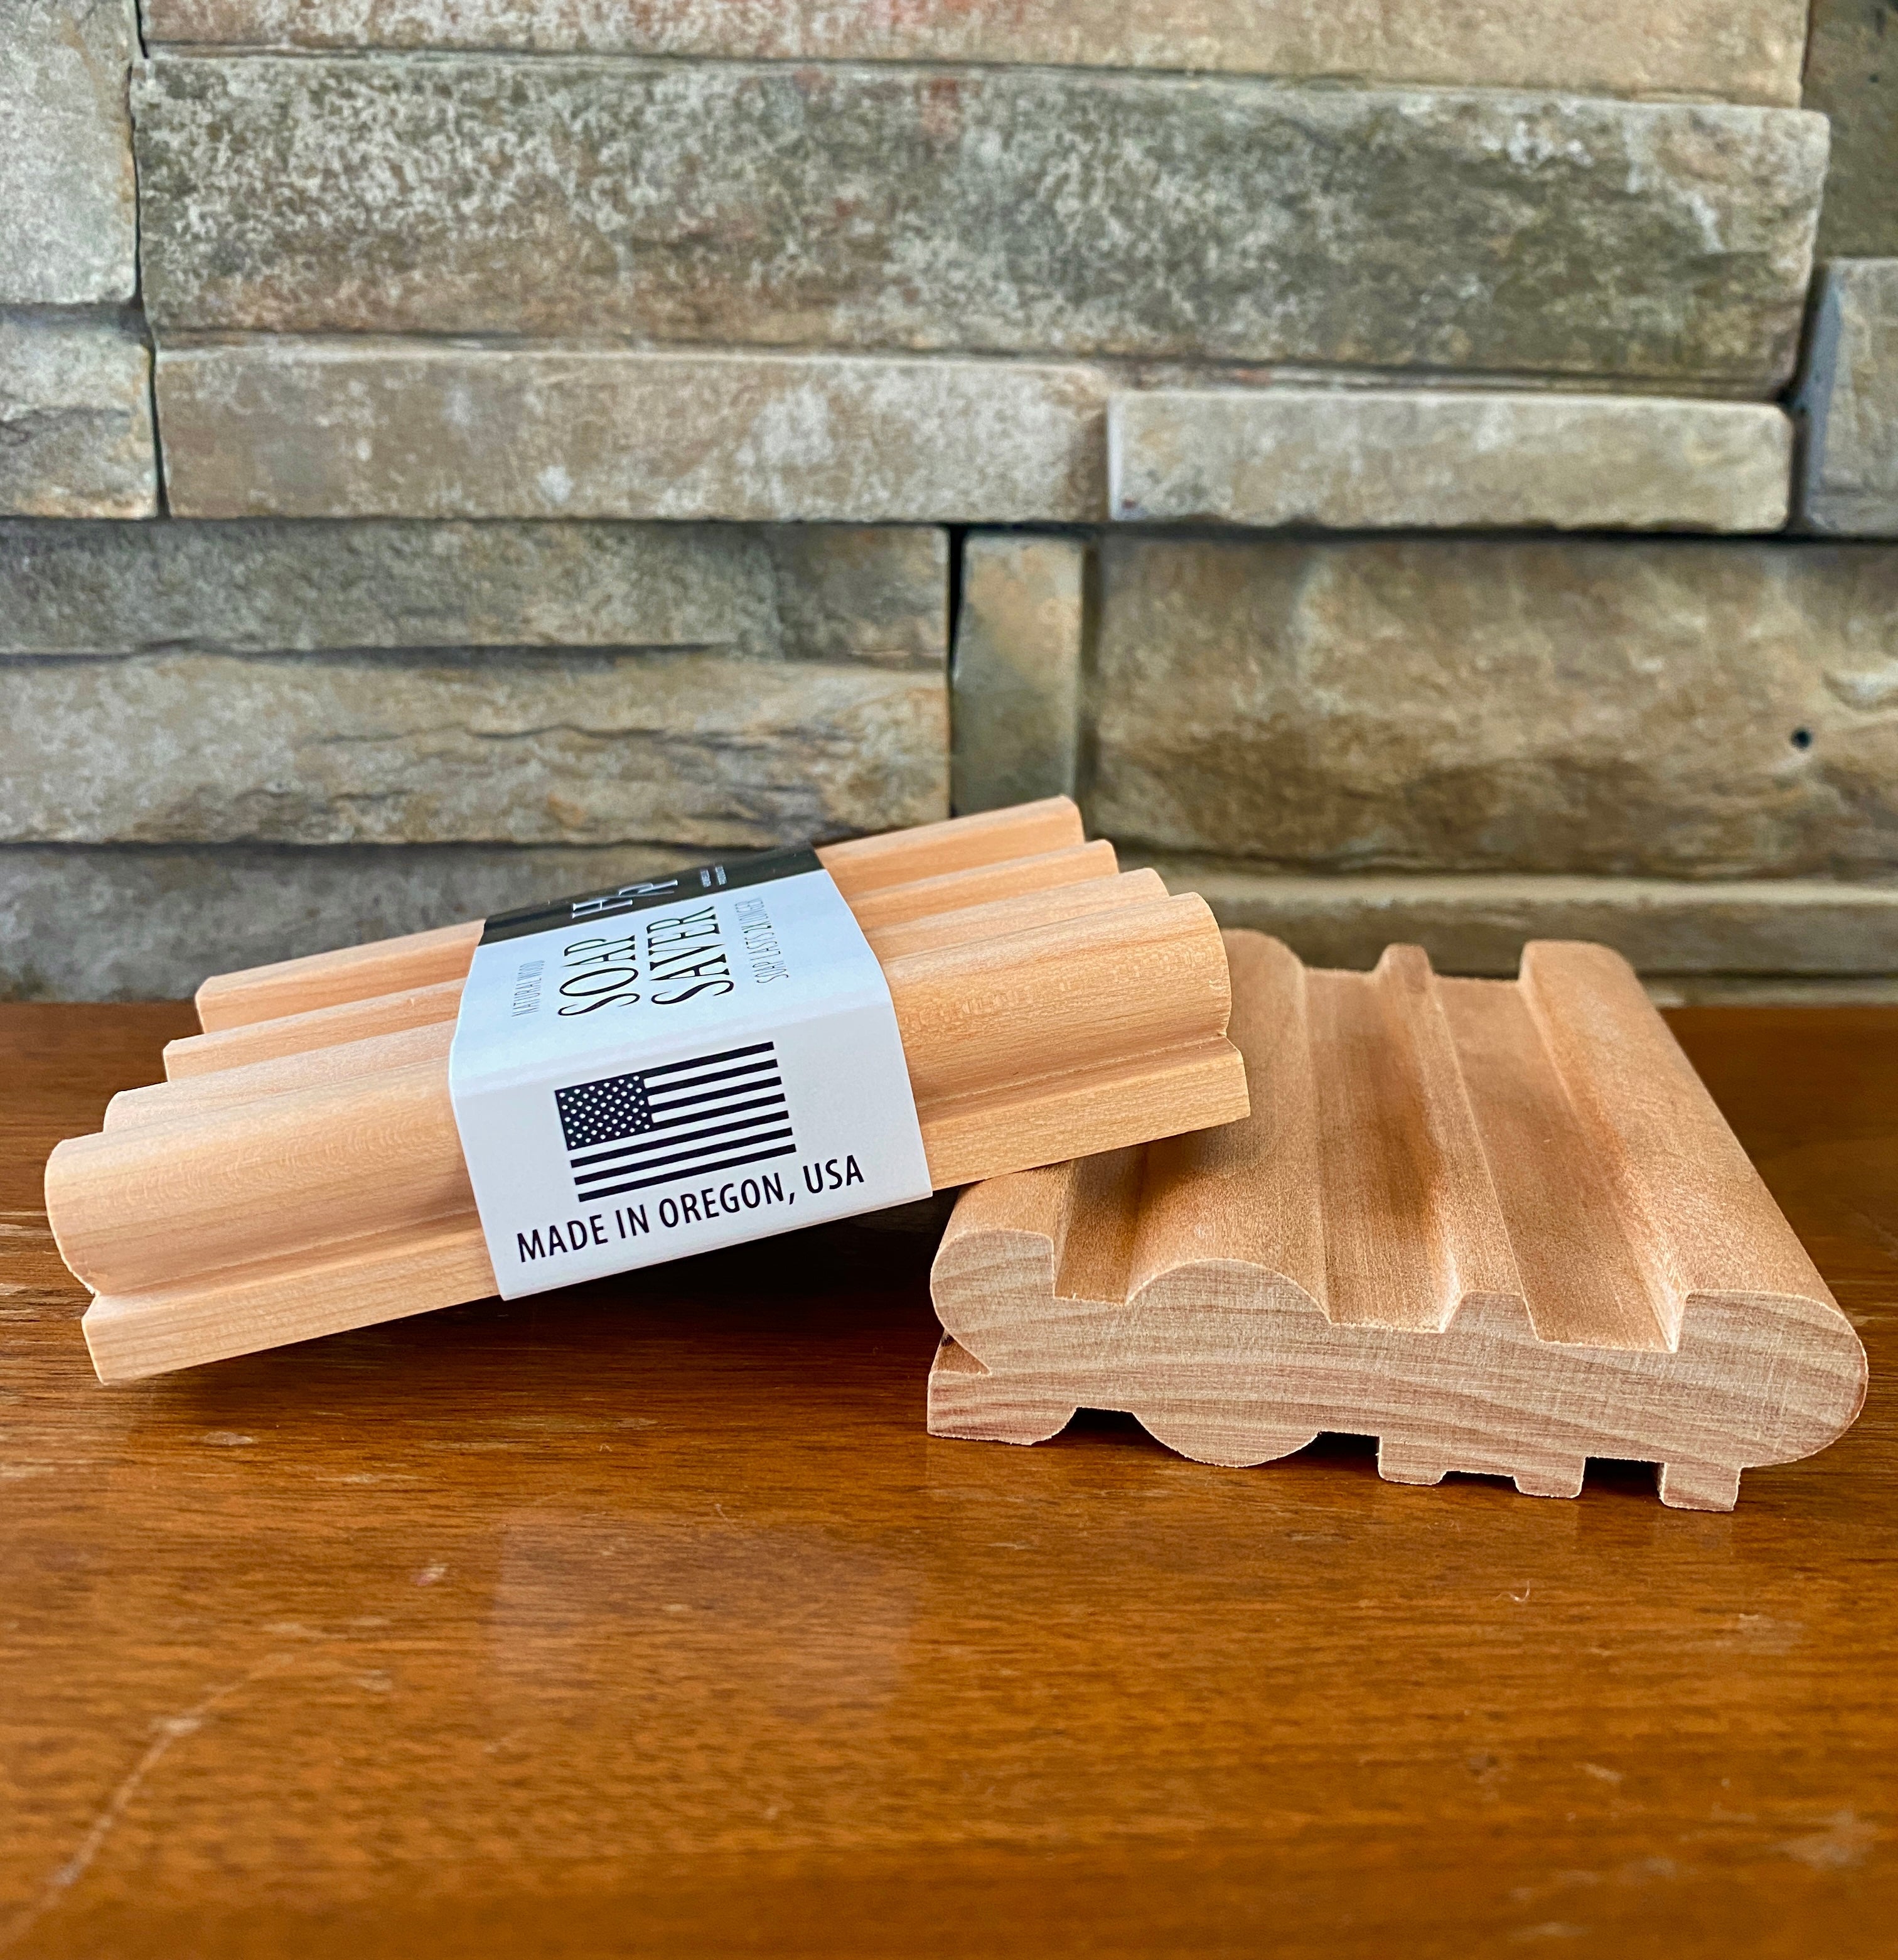 Ponderosa Pine "SOAP" Saver - Wood Soap Dish